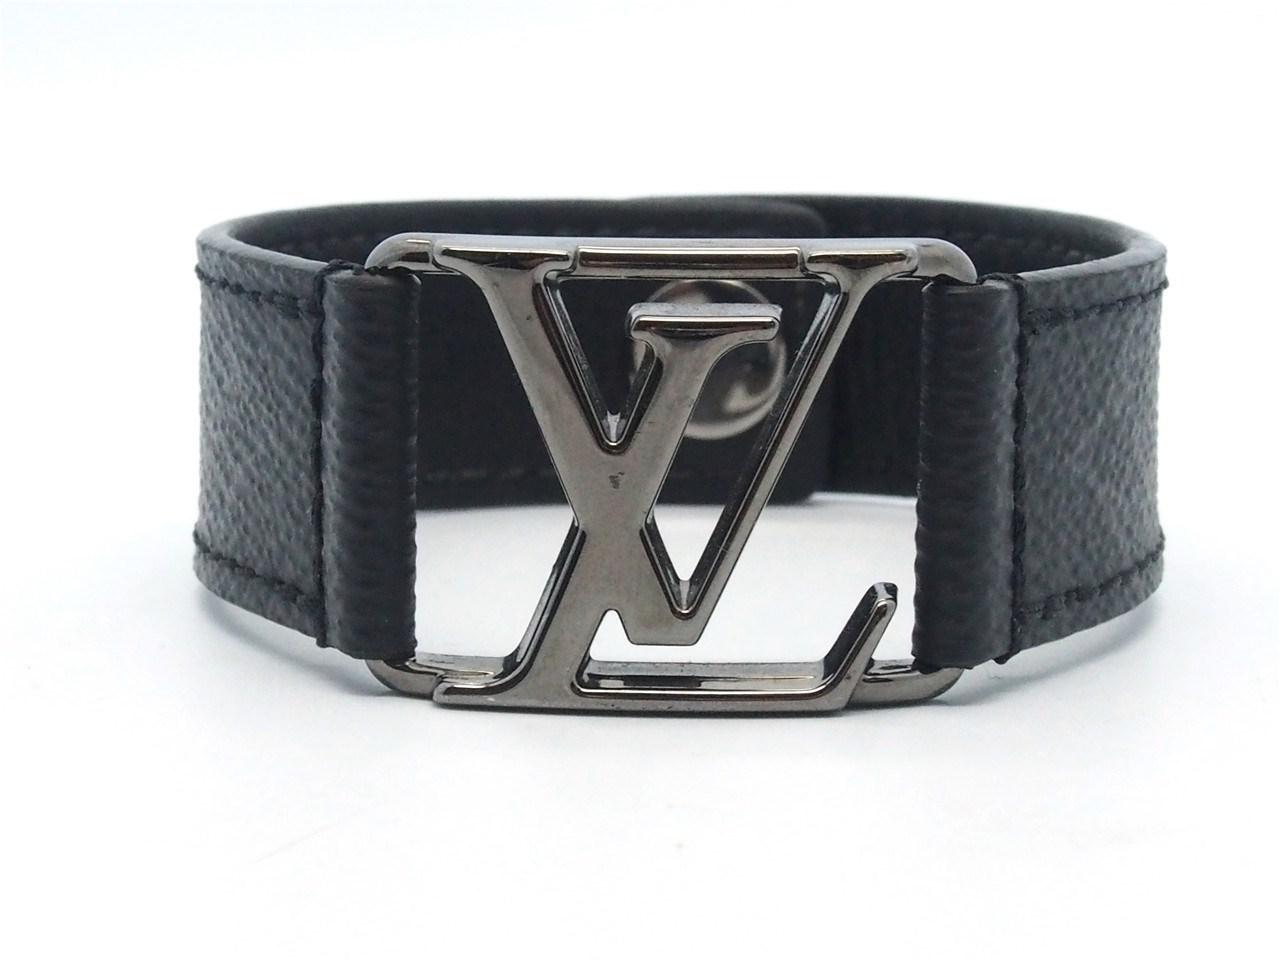 Lyst - Louis Vuitton Authentic Monogram Eclipse M6295 Hockenheim Bracelet Size 21 17032053ck in ...